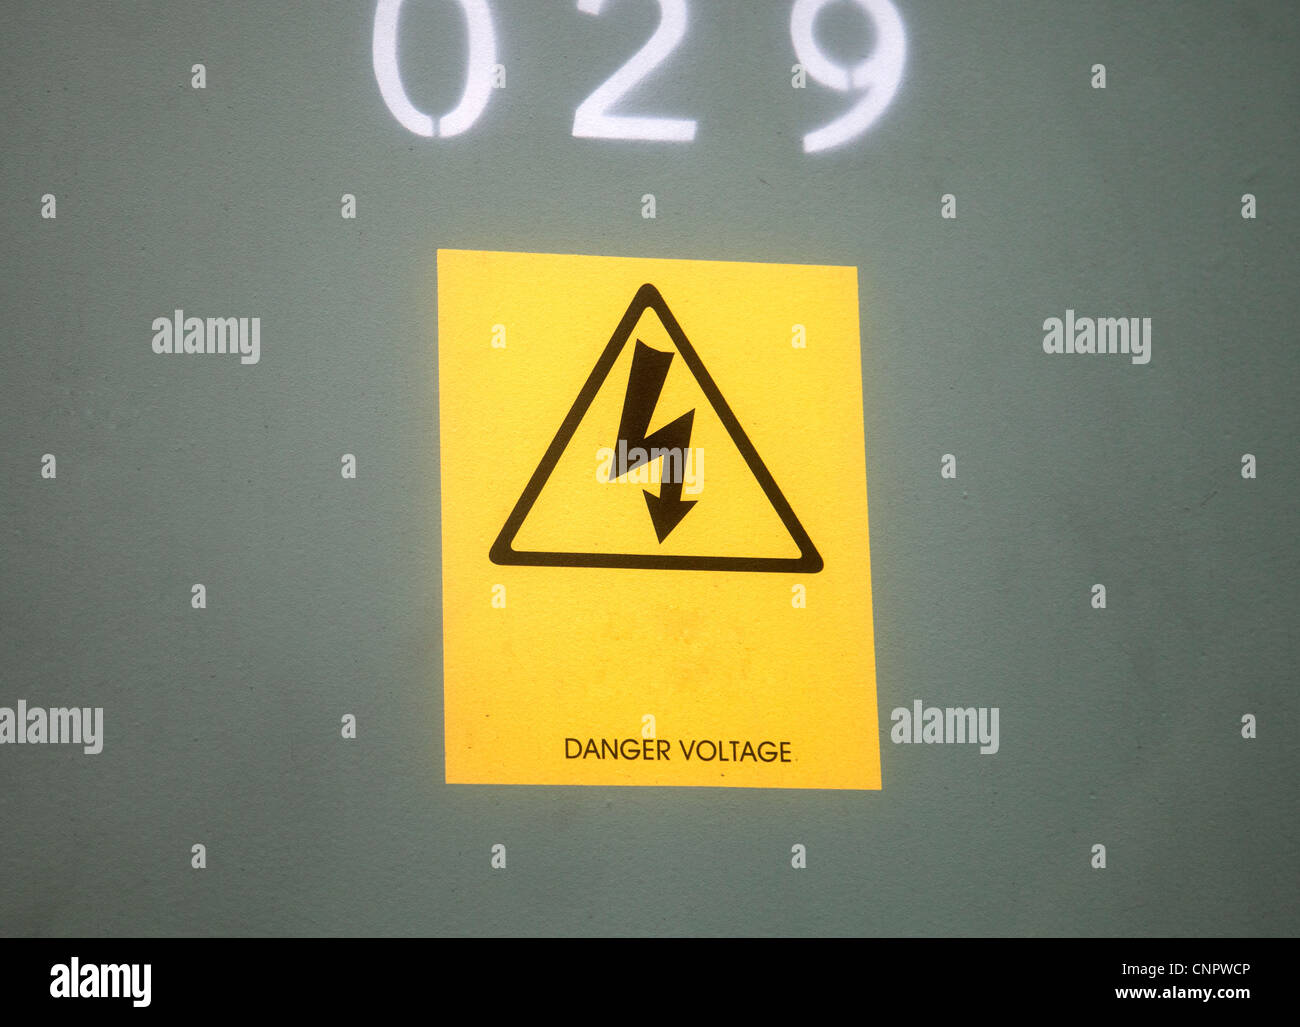 danger high voltage sign Stock Photo